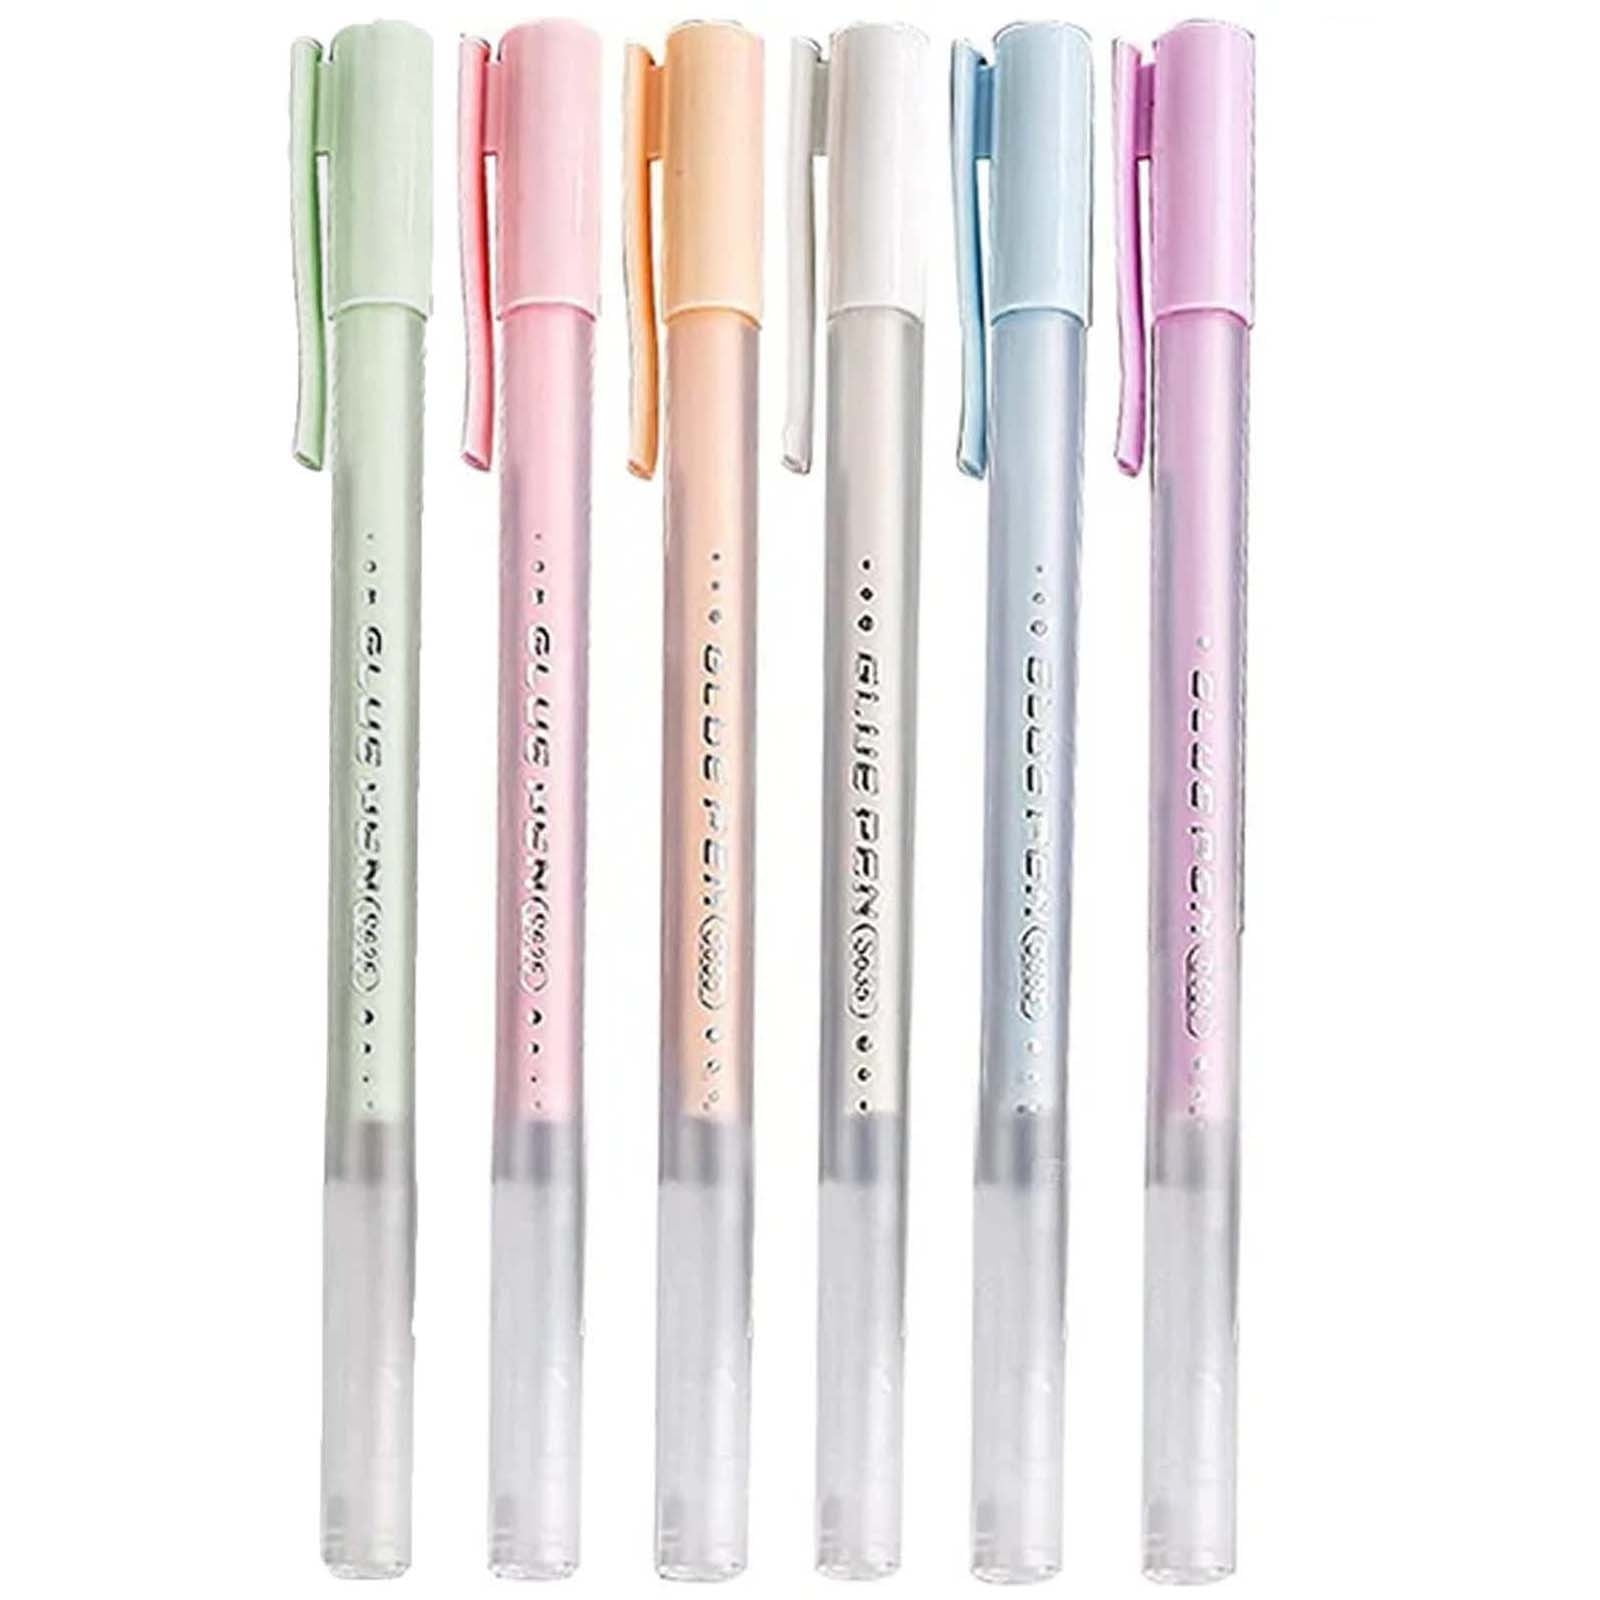 Colored Pencil Case 200 Slots Pen Pencil Bag Organizer with Handle Strap  Portable- Multilayer Holder for Colored Pencils & Gel Pen - Grey